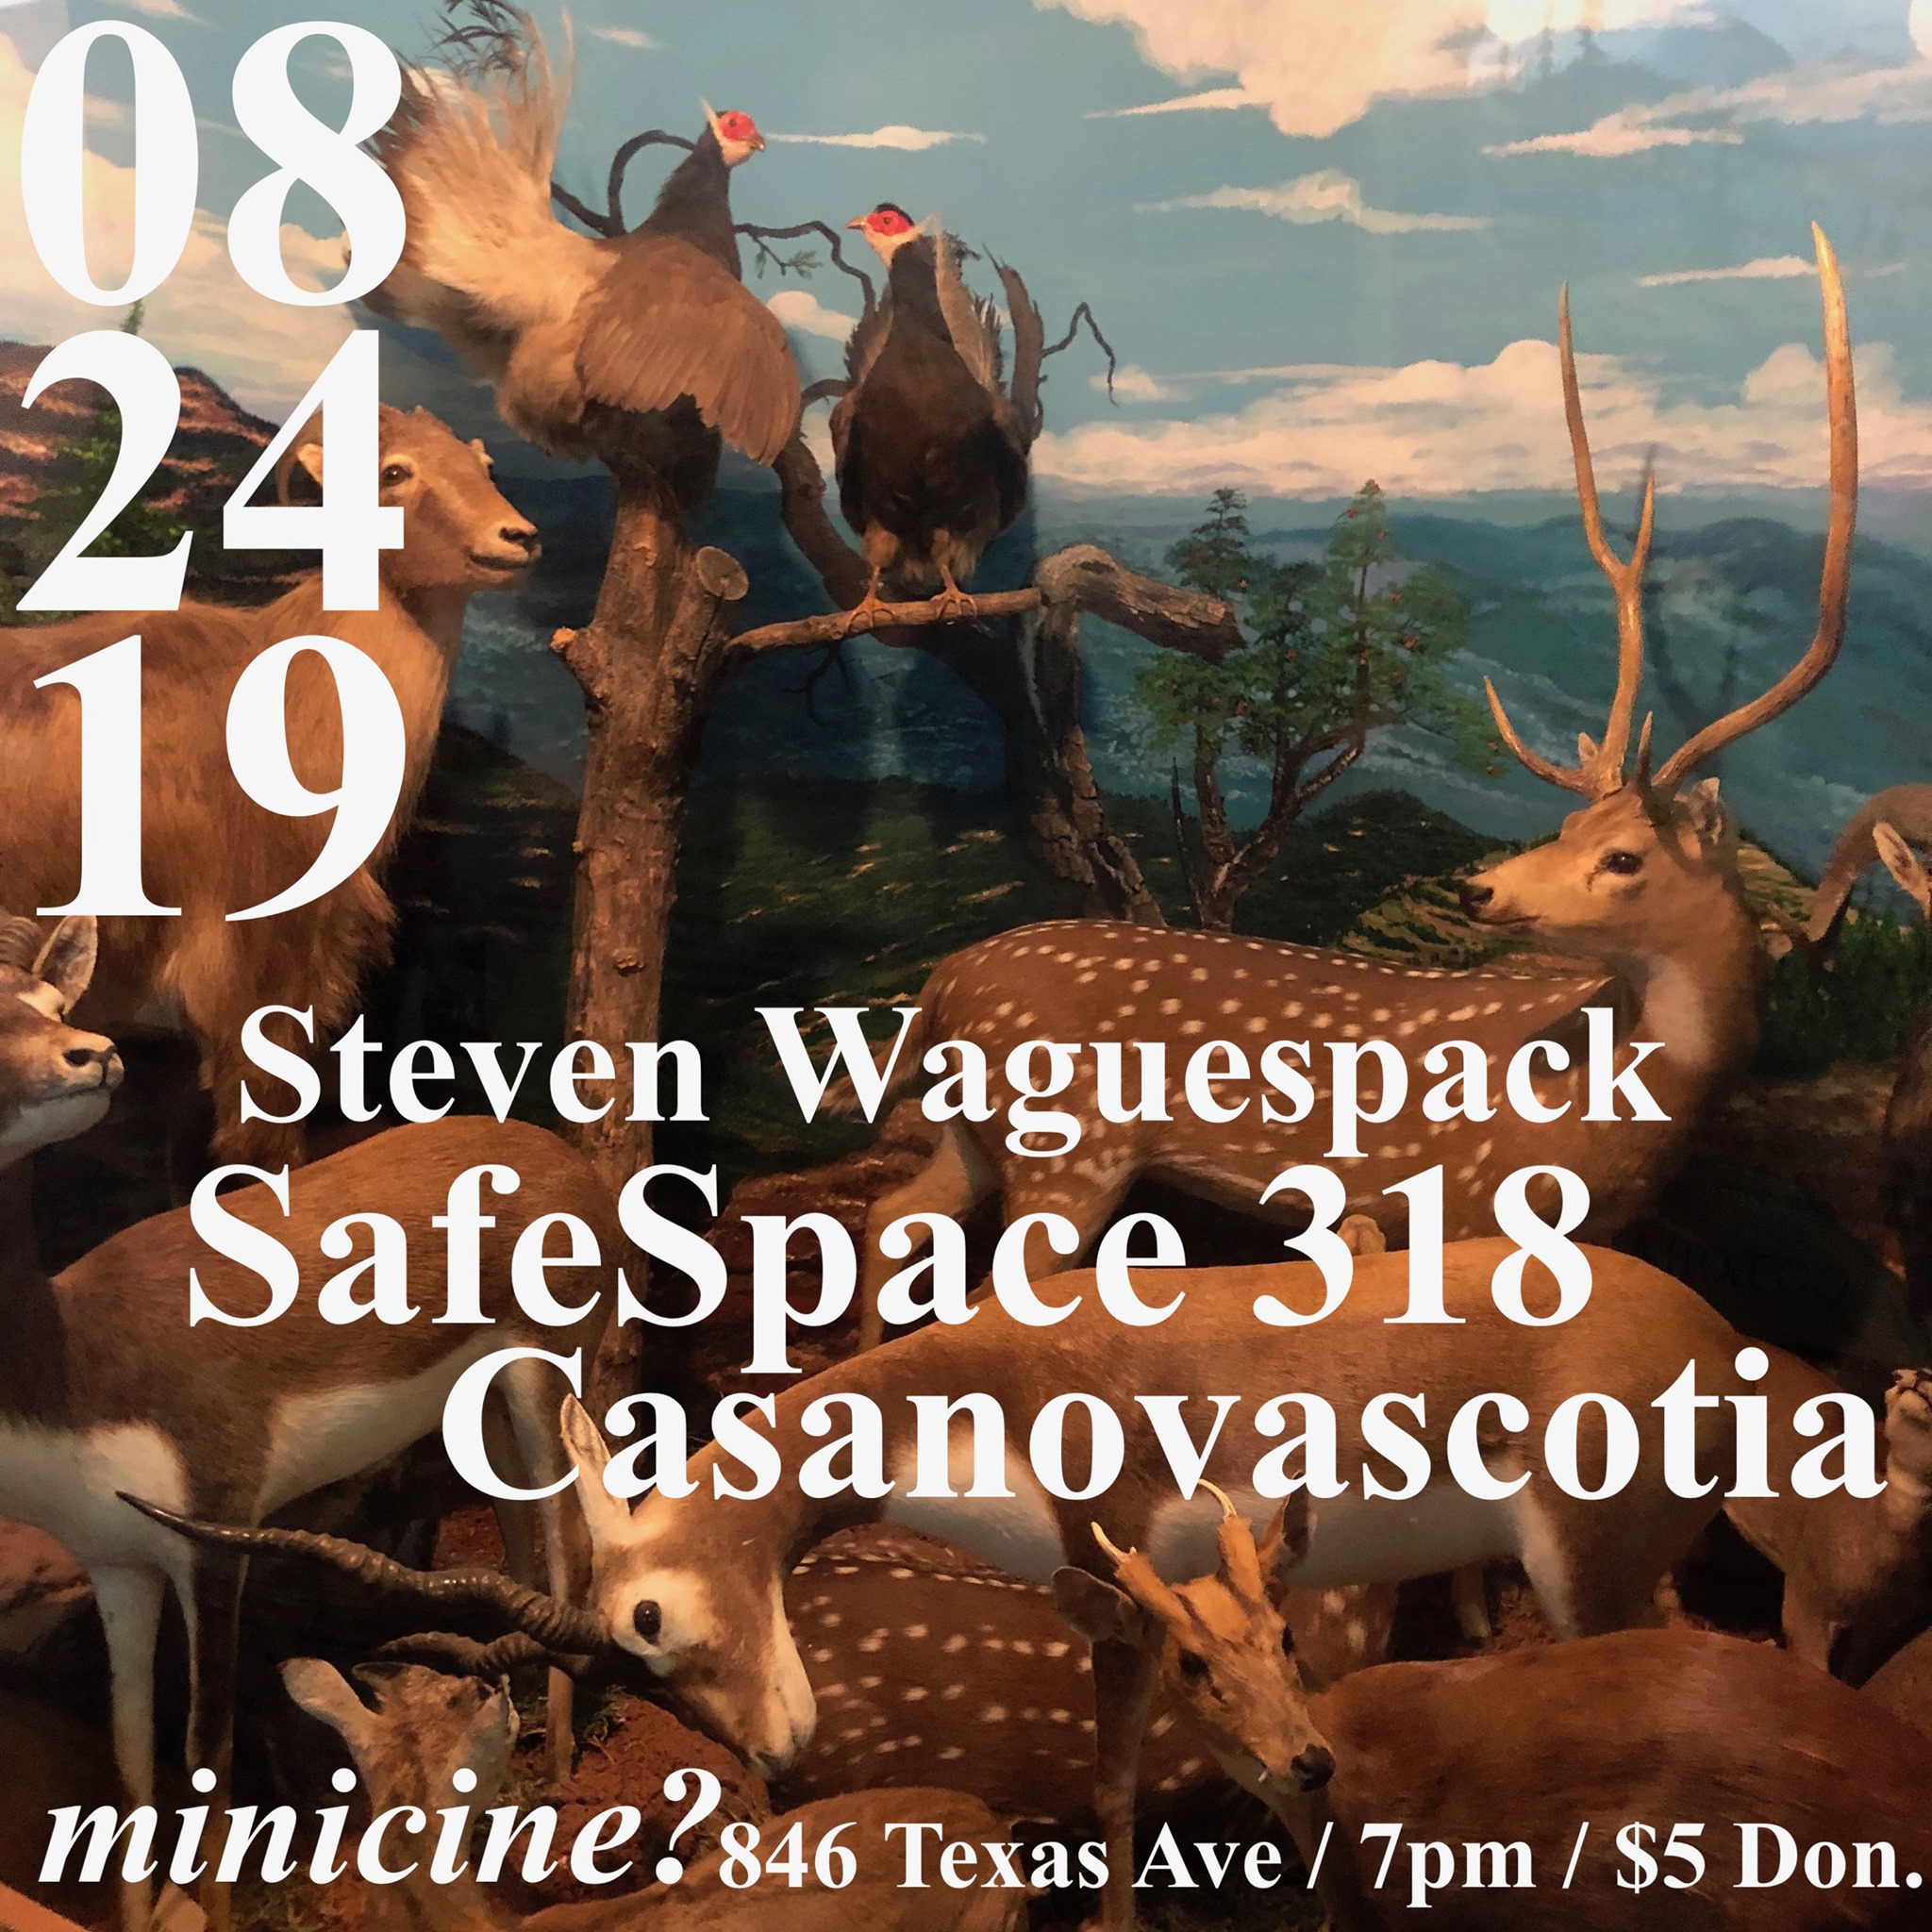 Safe Space 318 / Casanovascotia / Steven Waugespack flyer